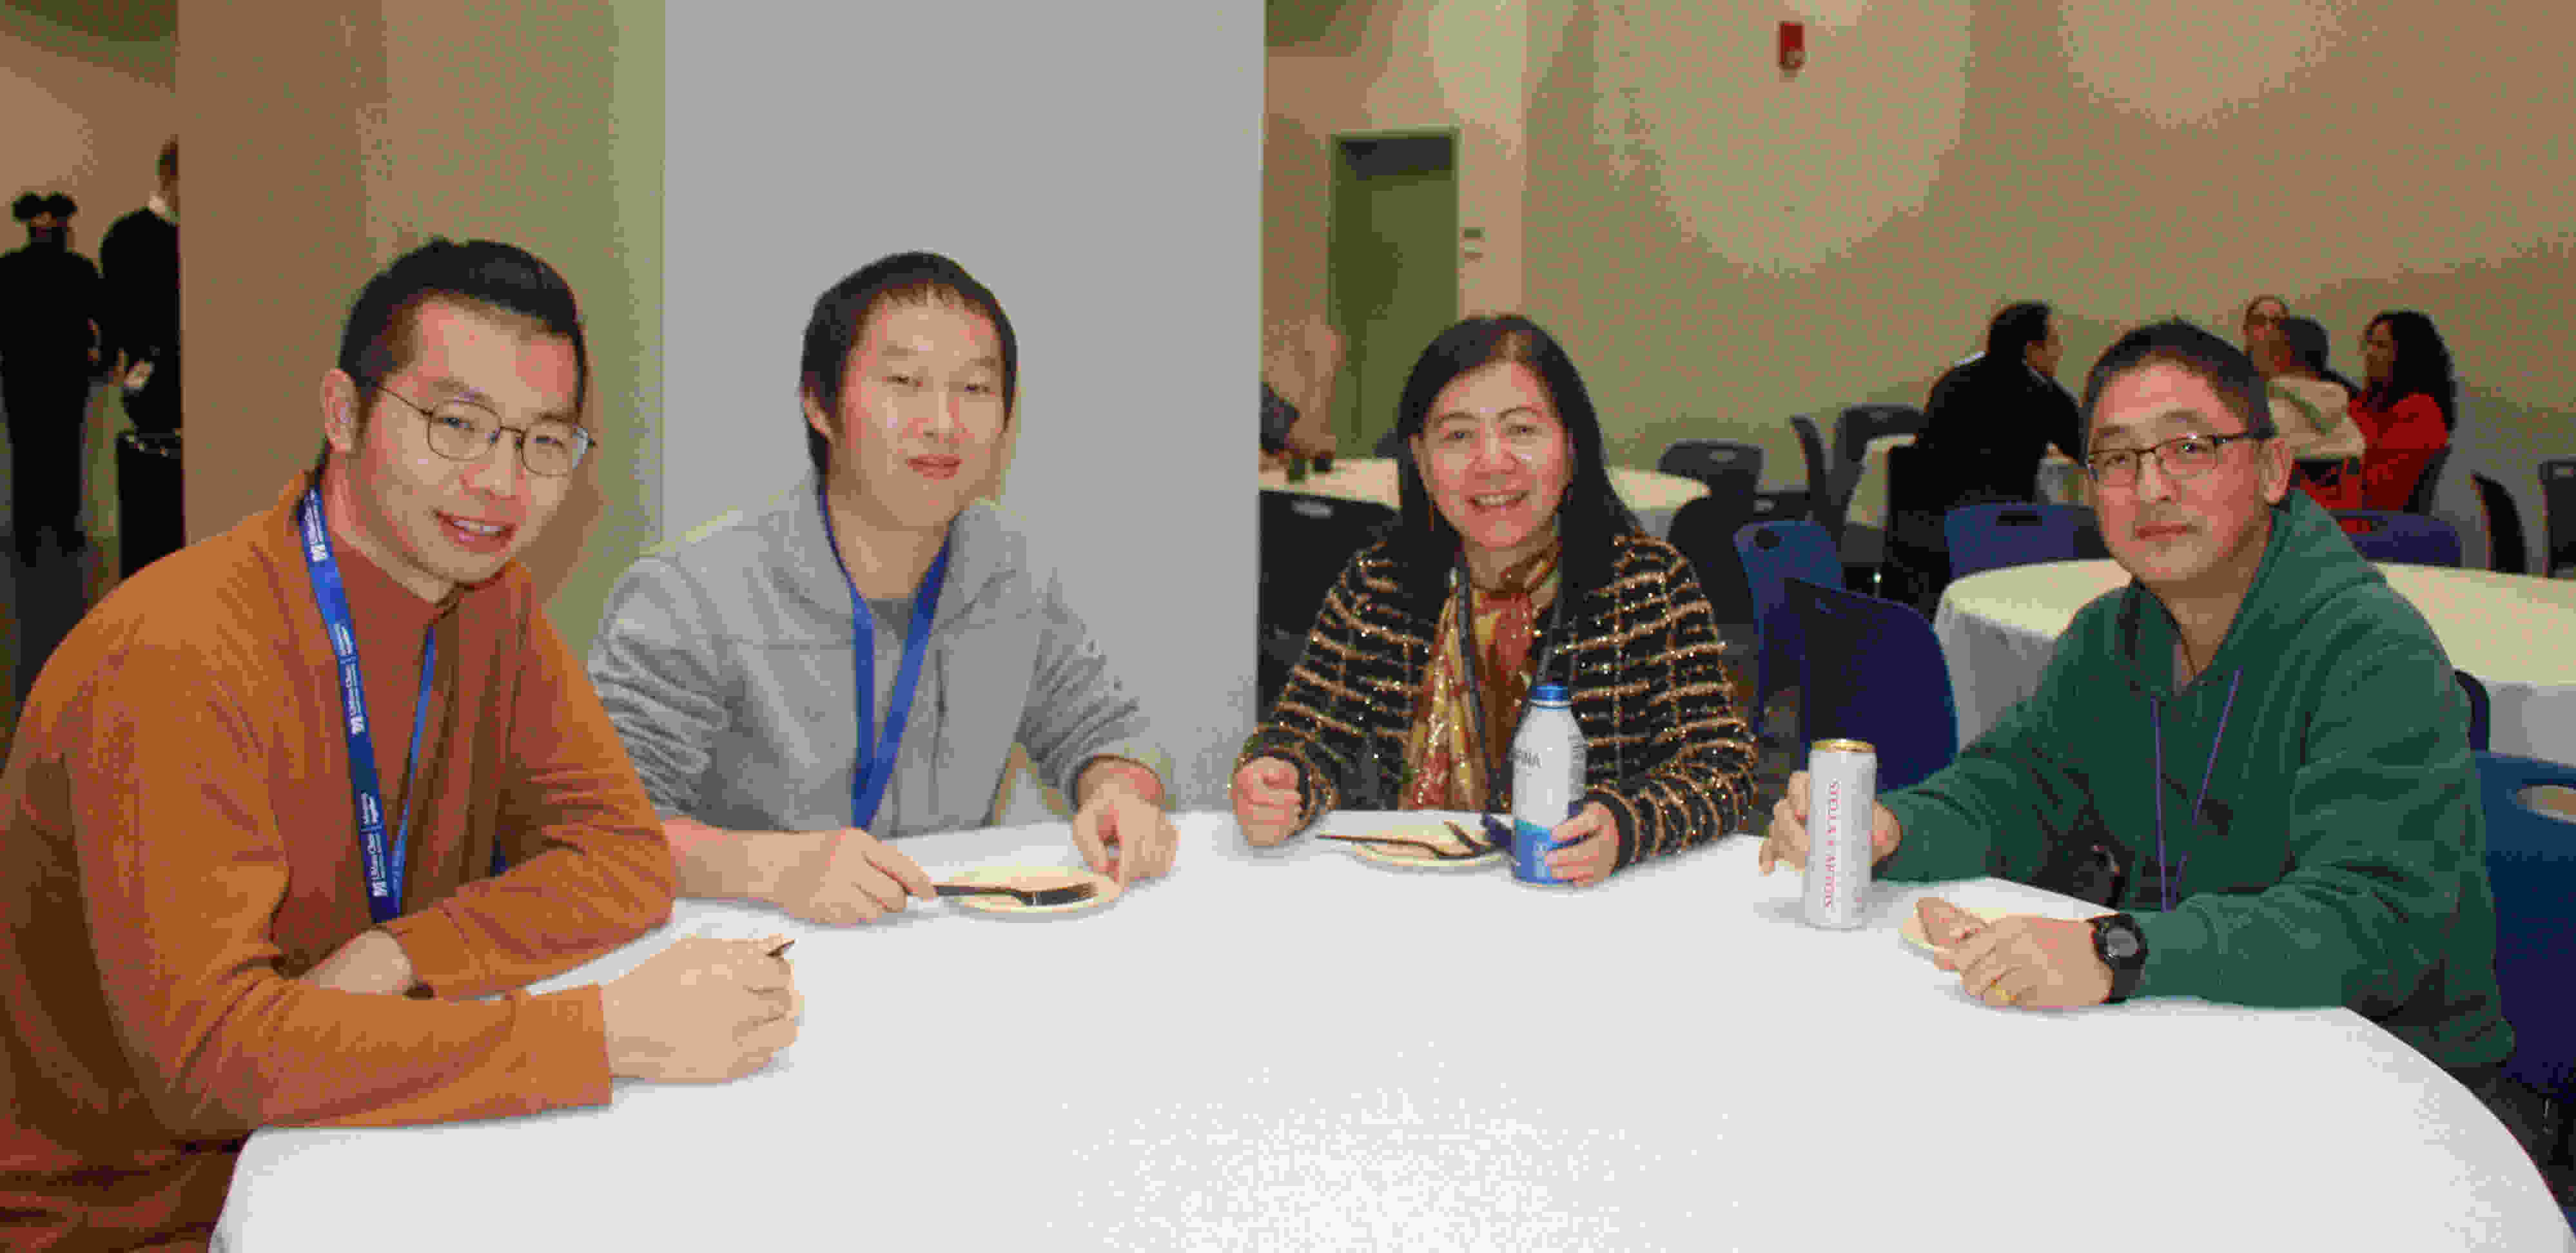 Neurology department team members at table 